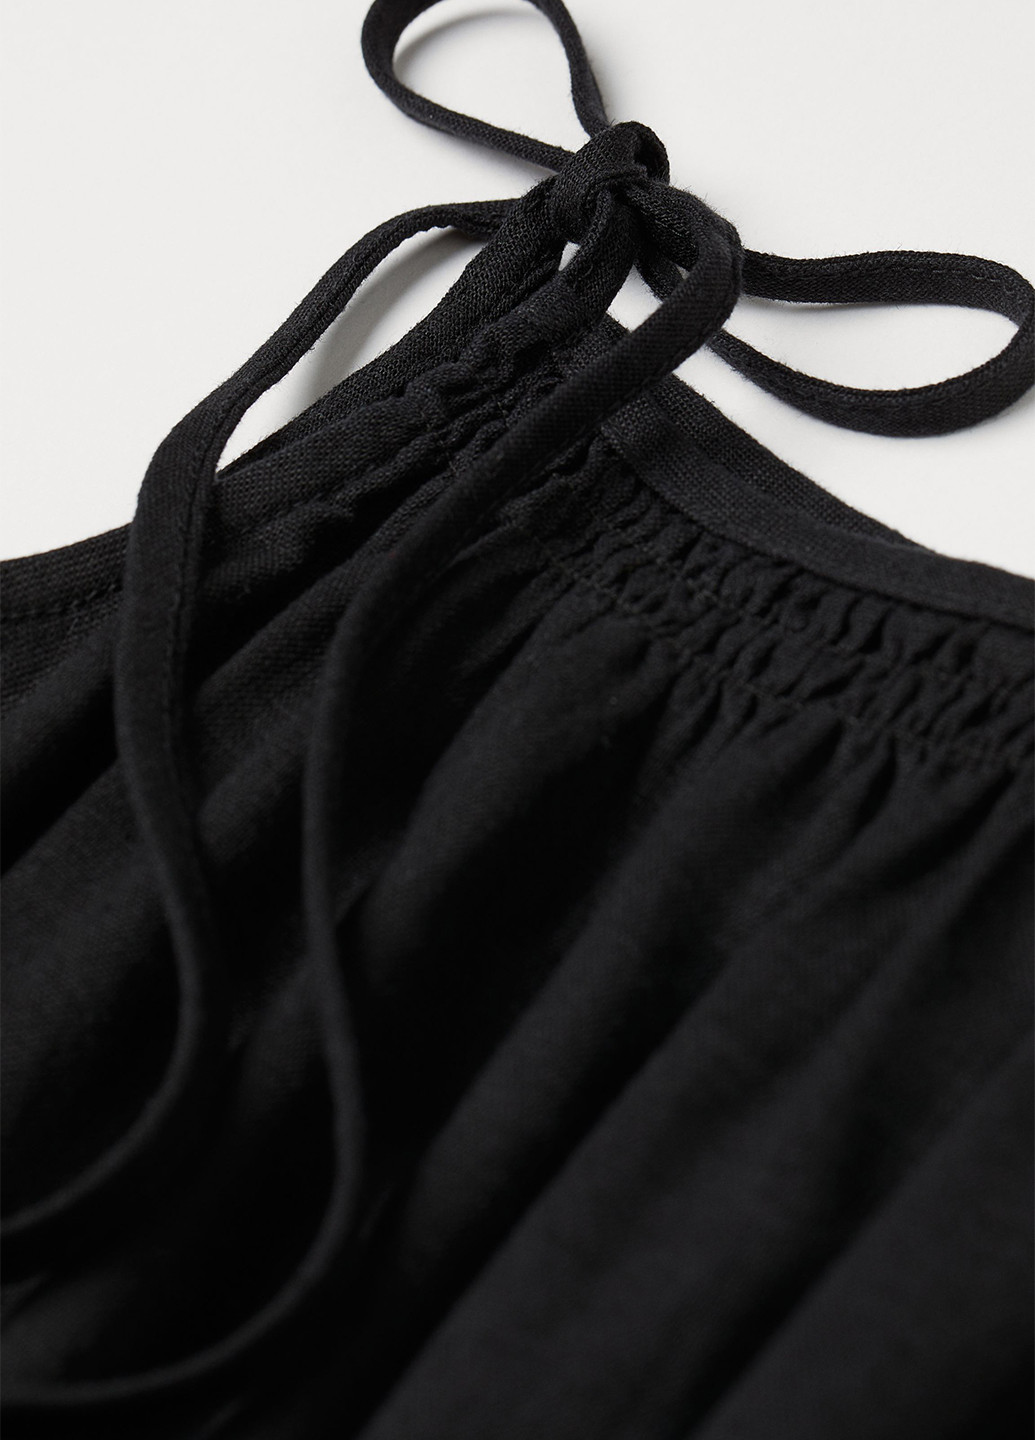 Комбинезон H&M комбинезон-брюки однотонный чёрный кэжуал вискоза, лен